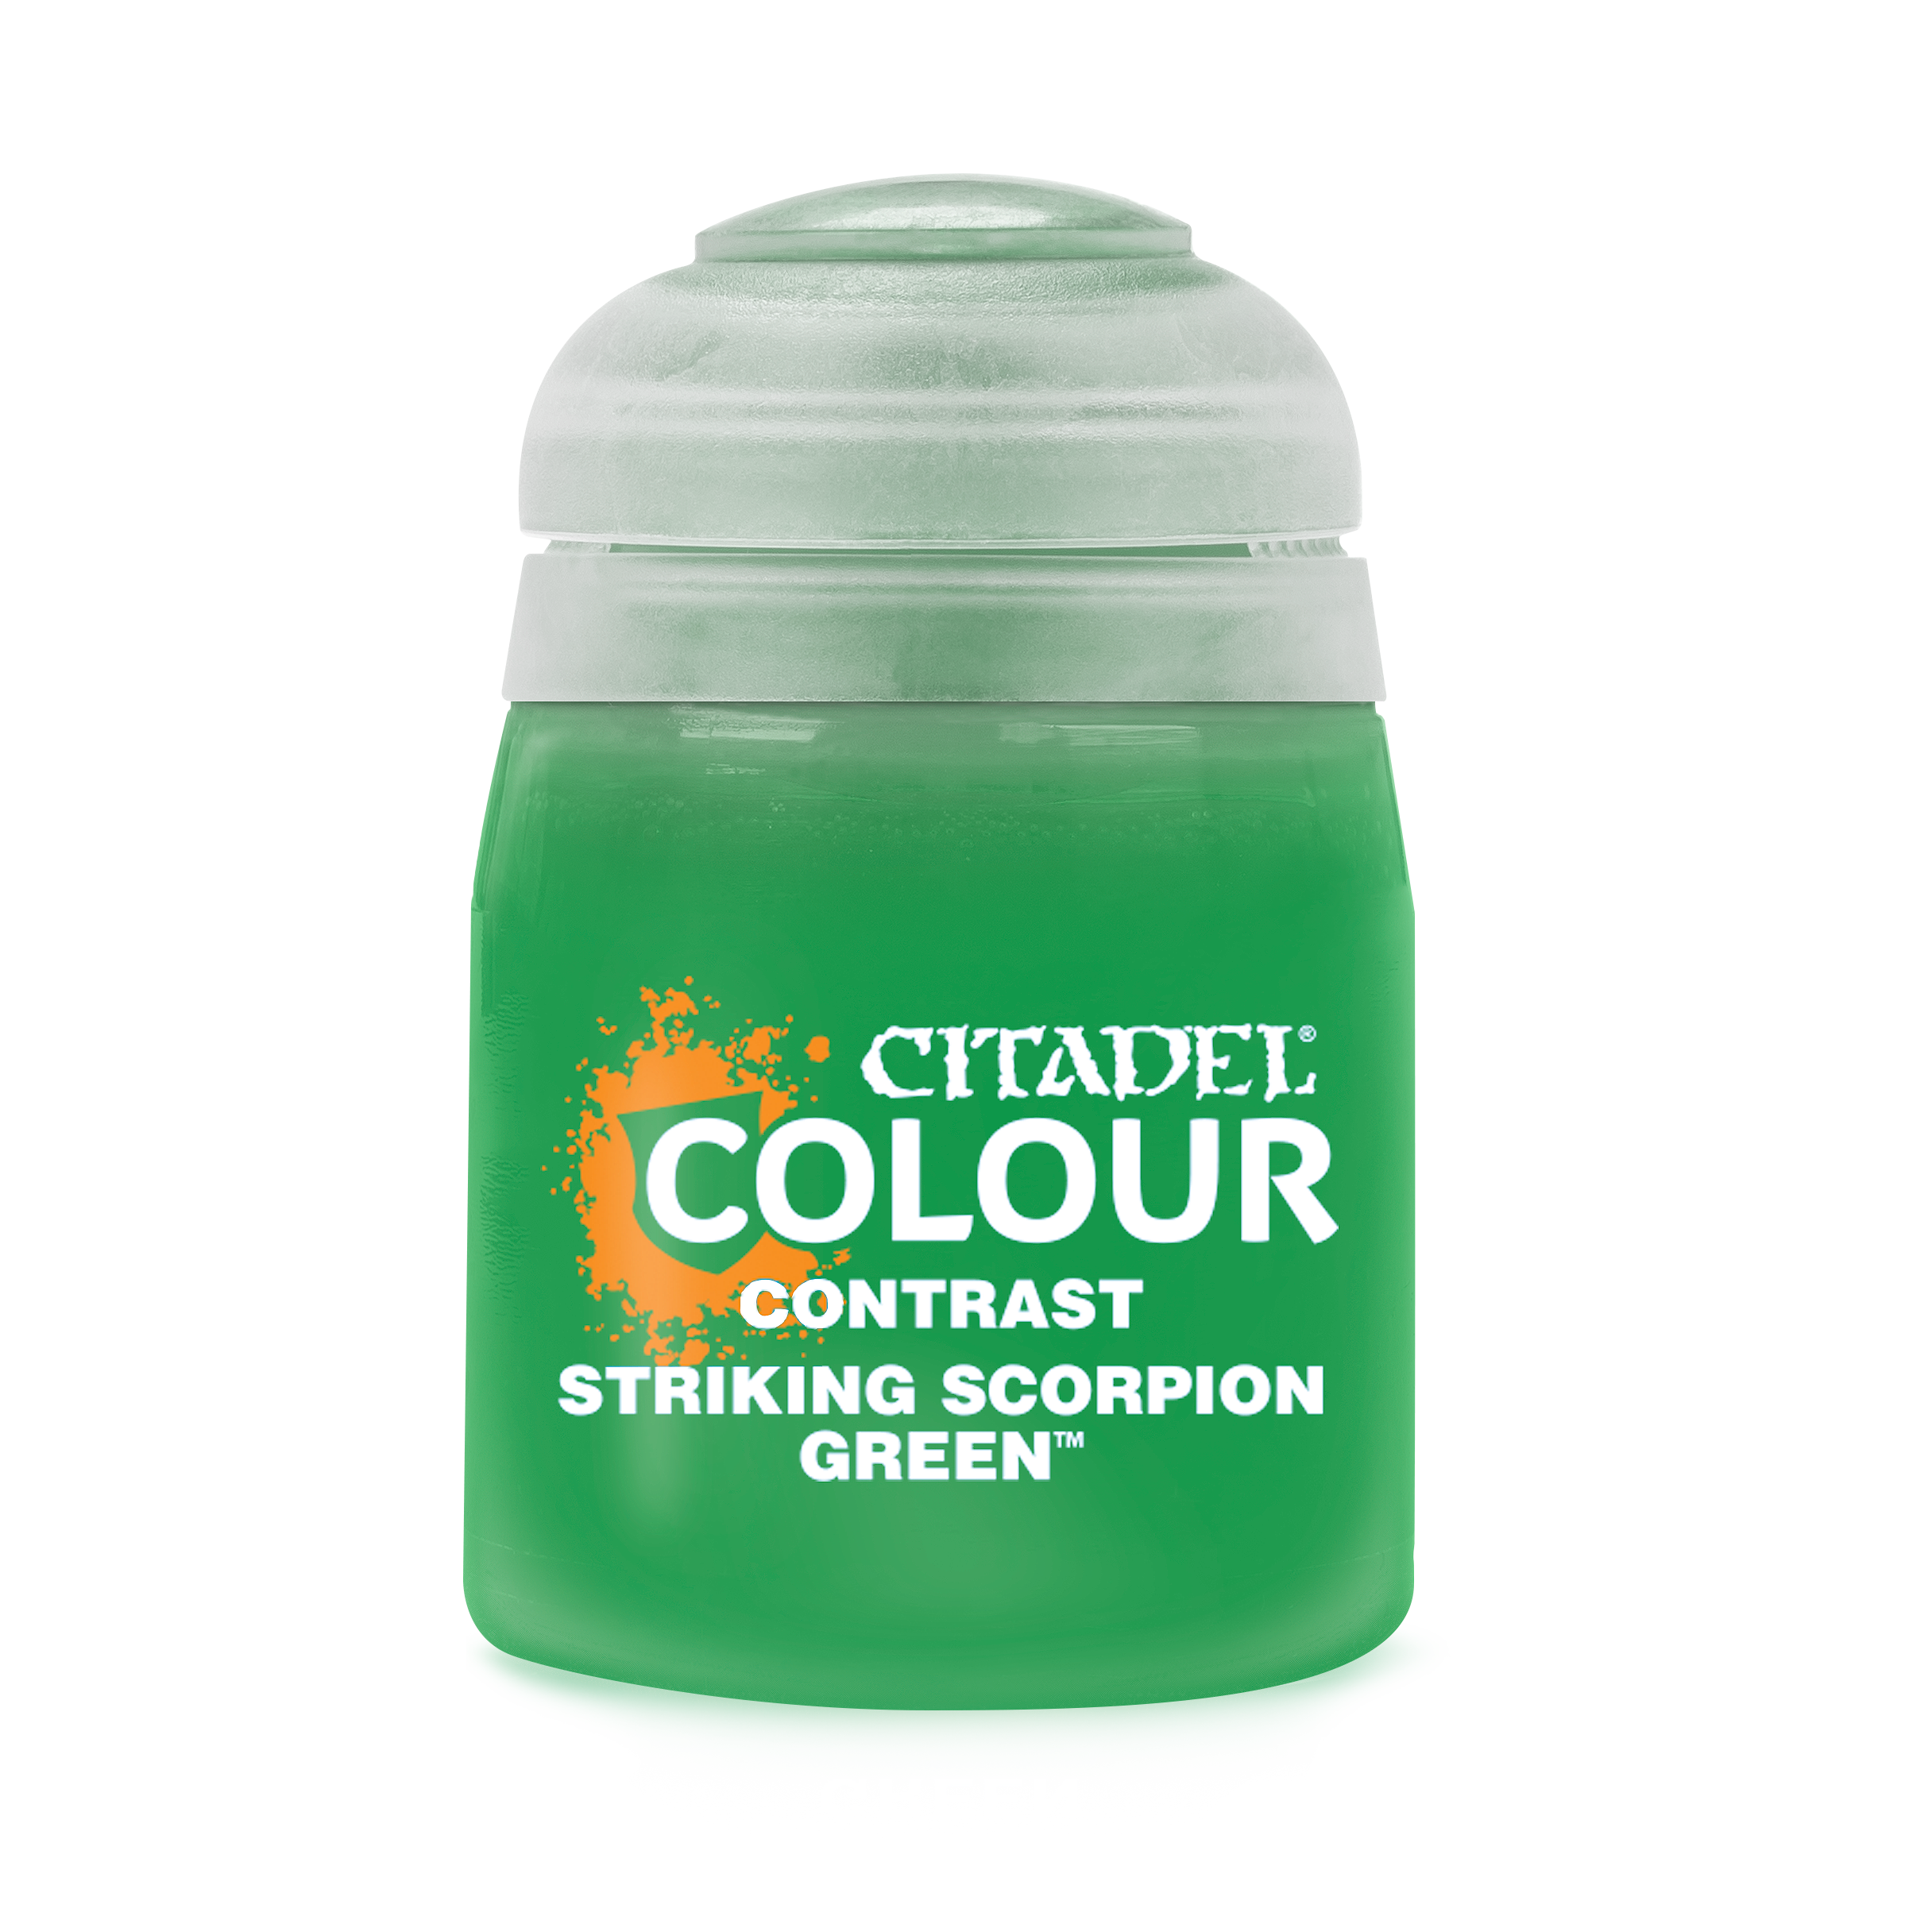 Striking Scorpion Green (Contrast) (29-51)